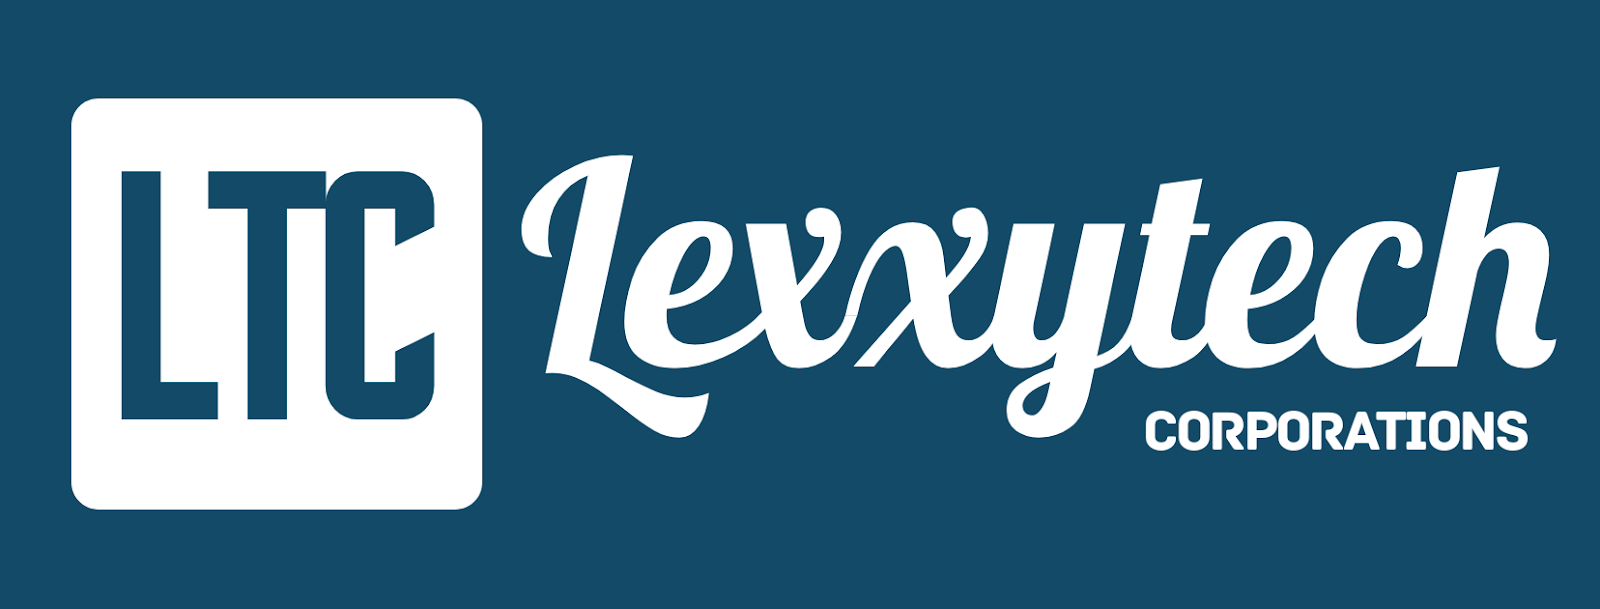 LexxyTech Corporations Rebranded